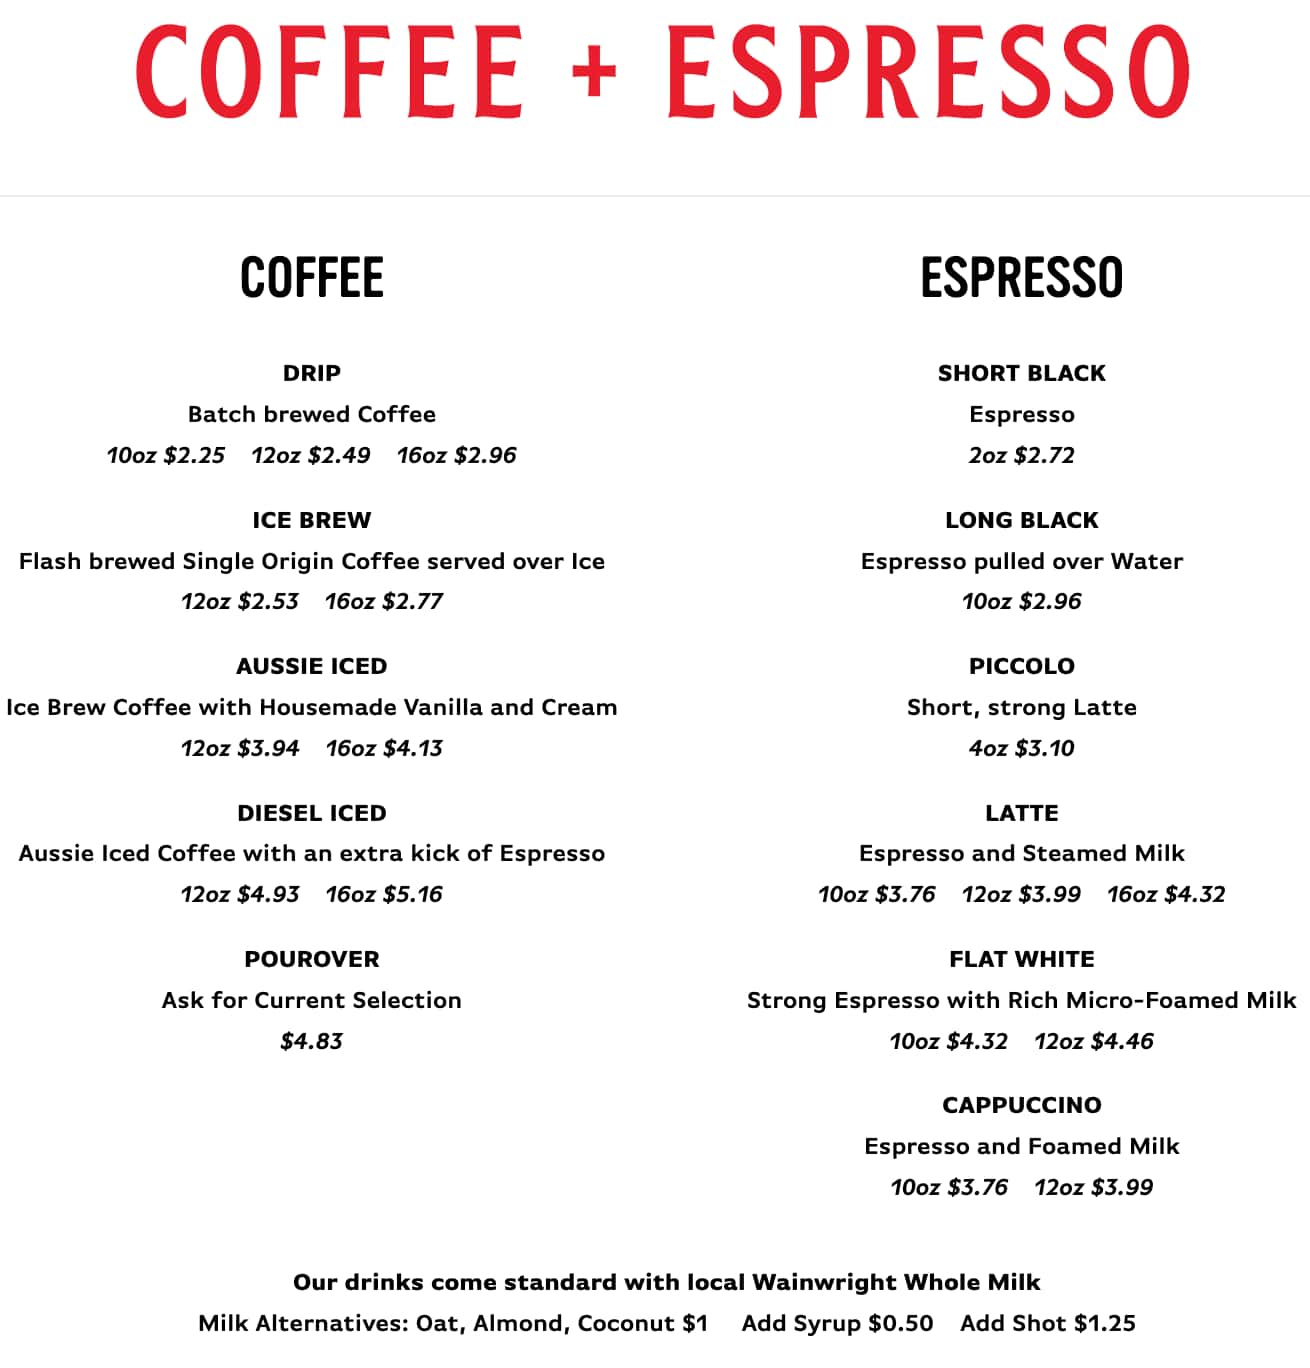 The Kookaburra Coffee Coffee and Espresso Menu